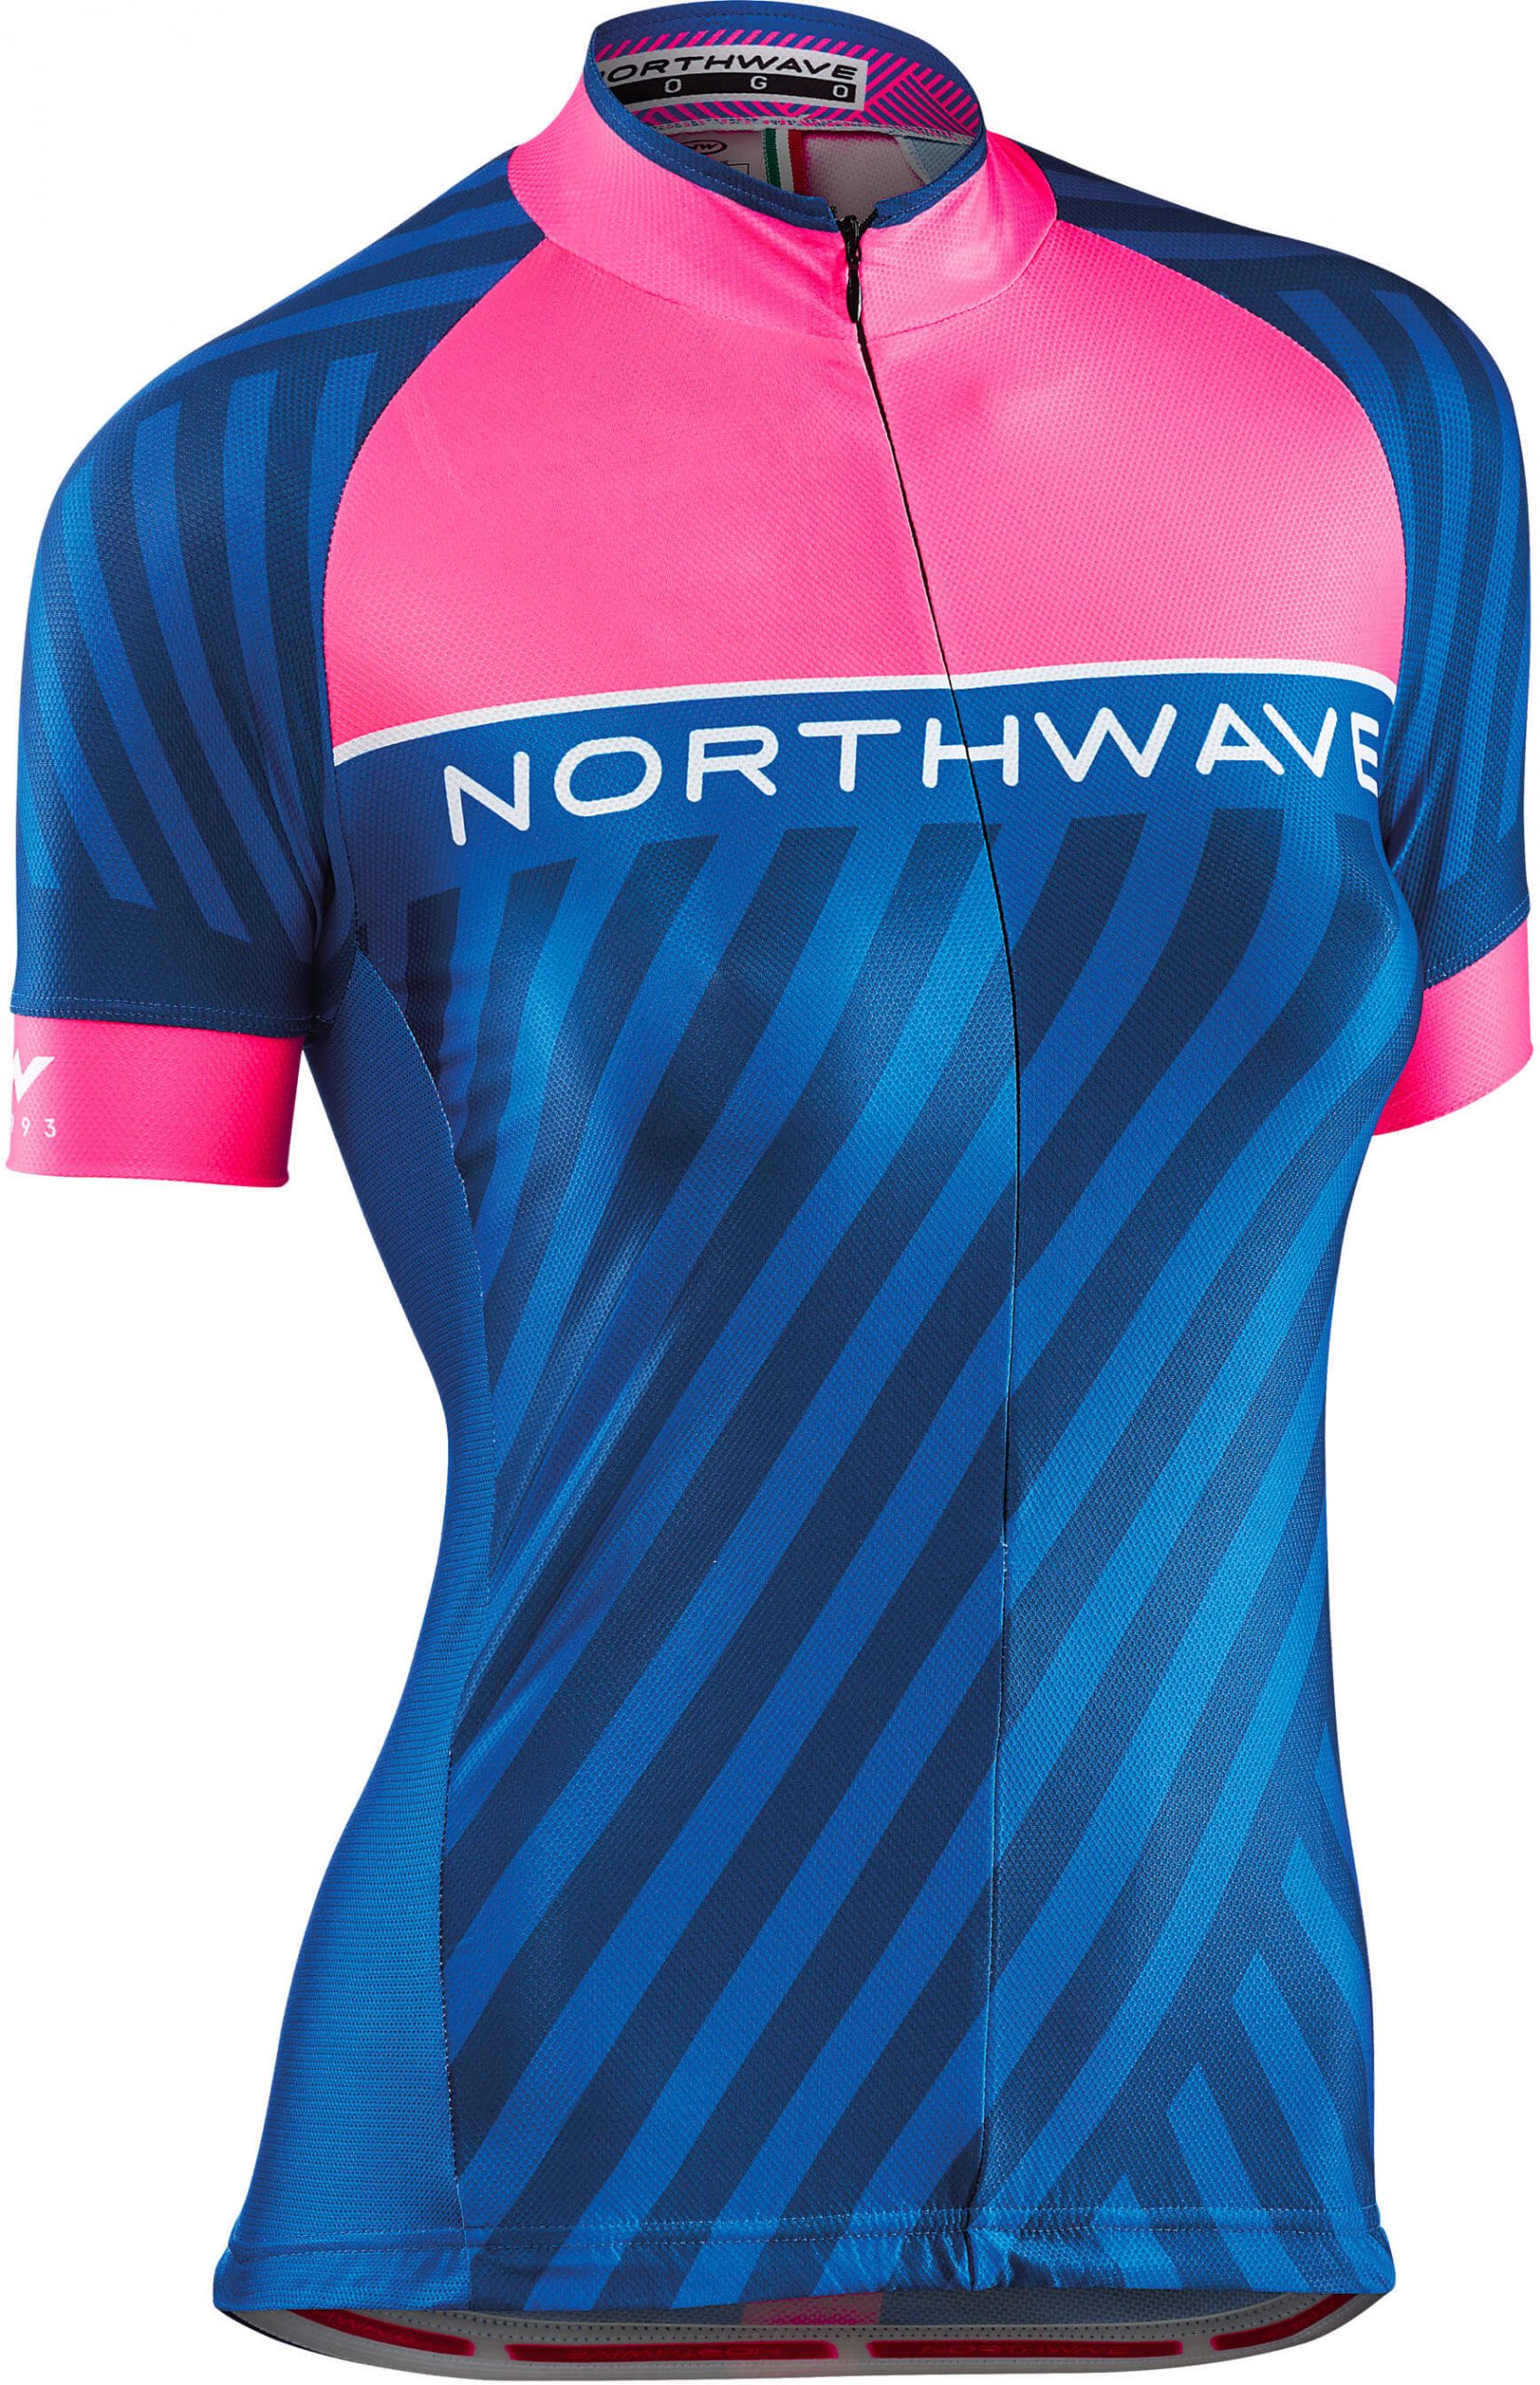 northwave_logo